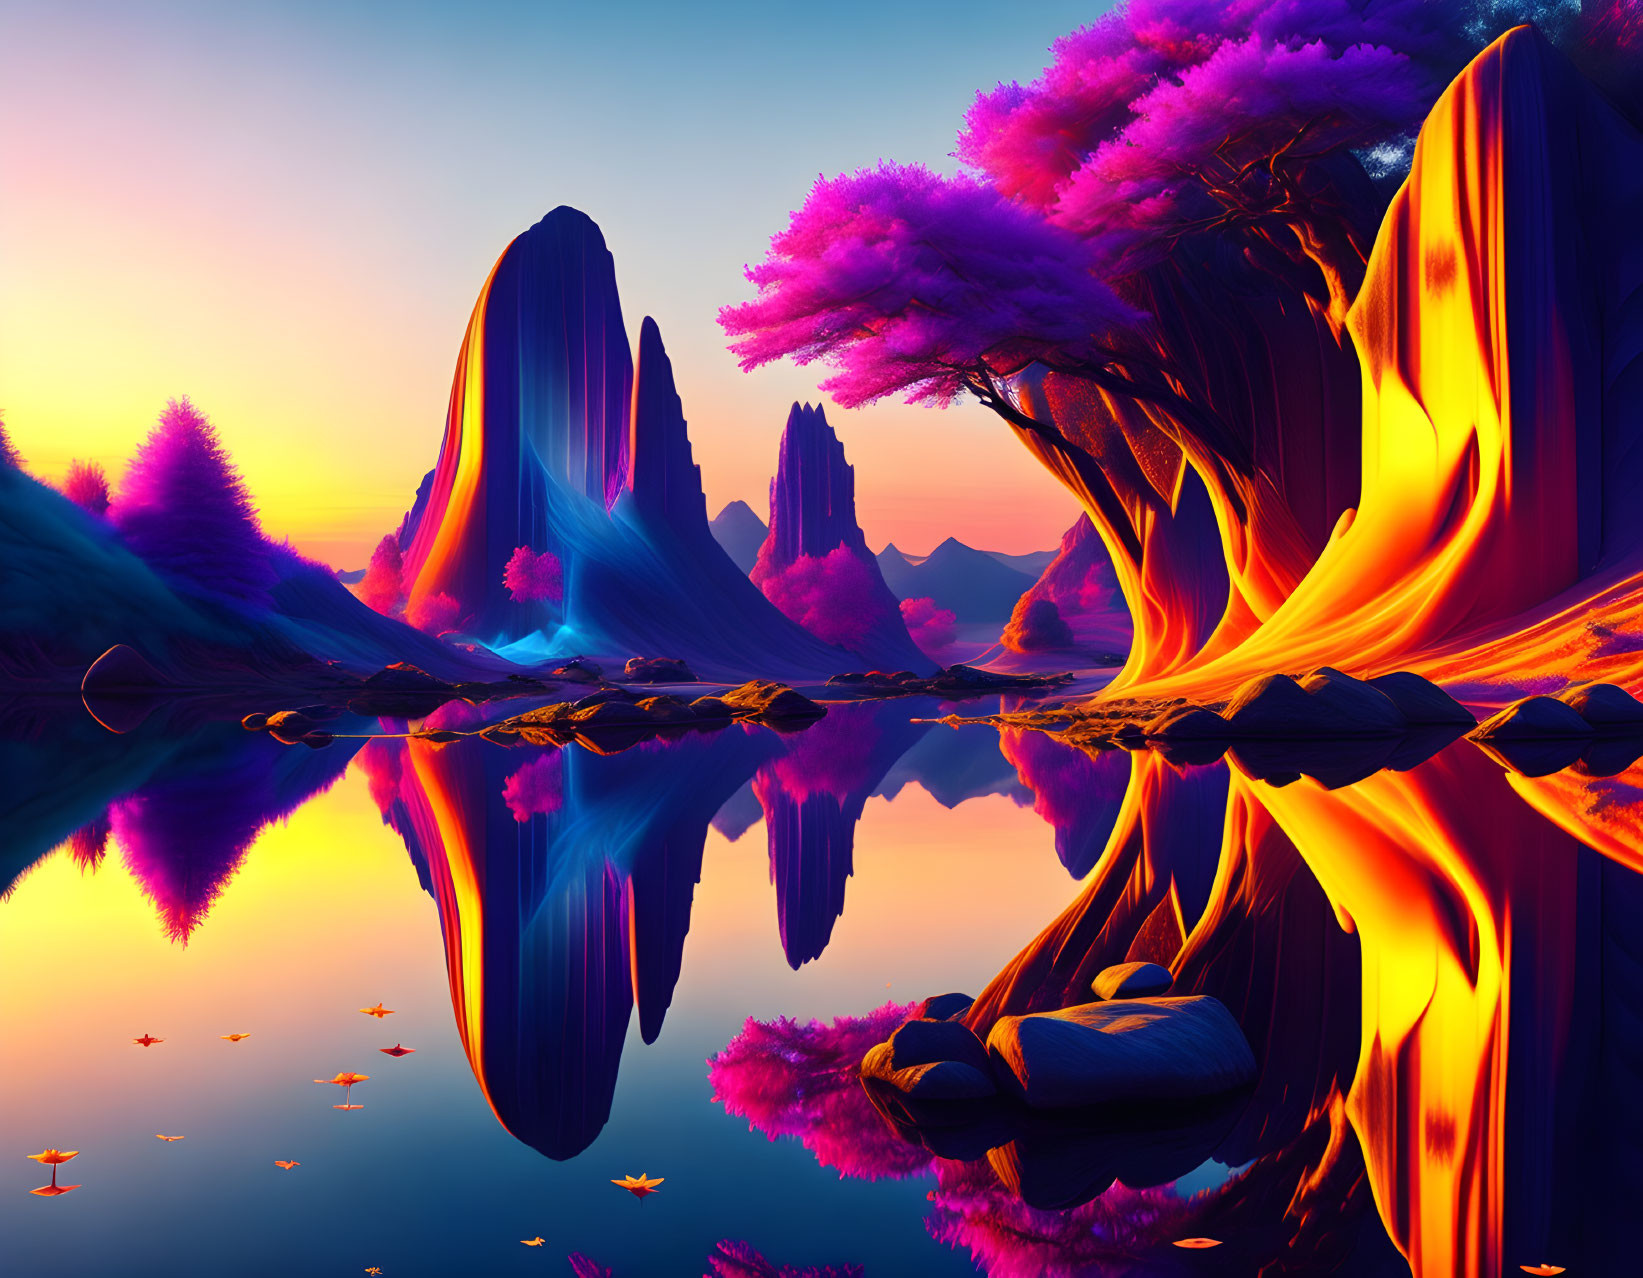 Colorful Digital Art Landscape: Purple Foliage, Orange Rocks, Reflective Water